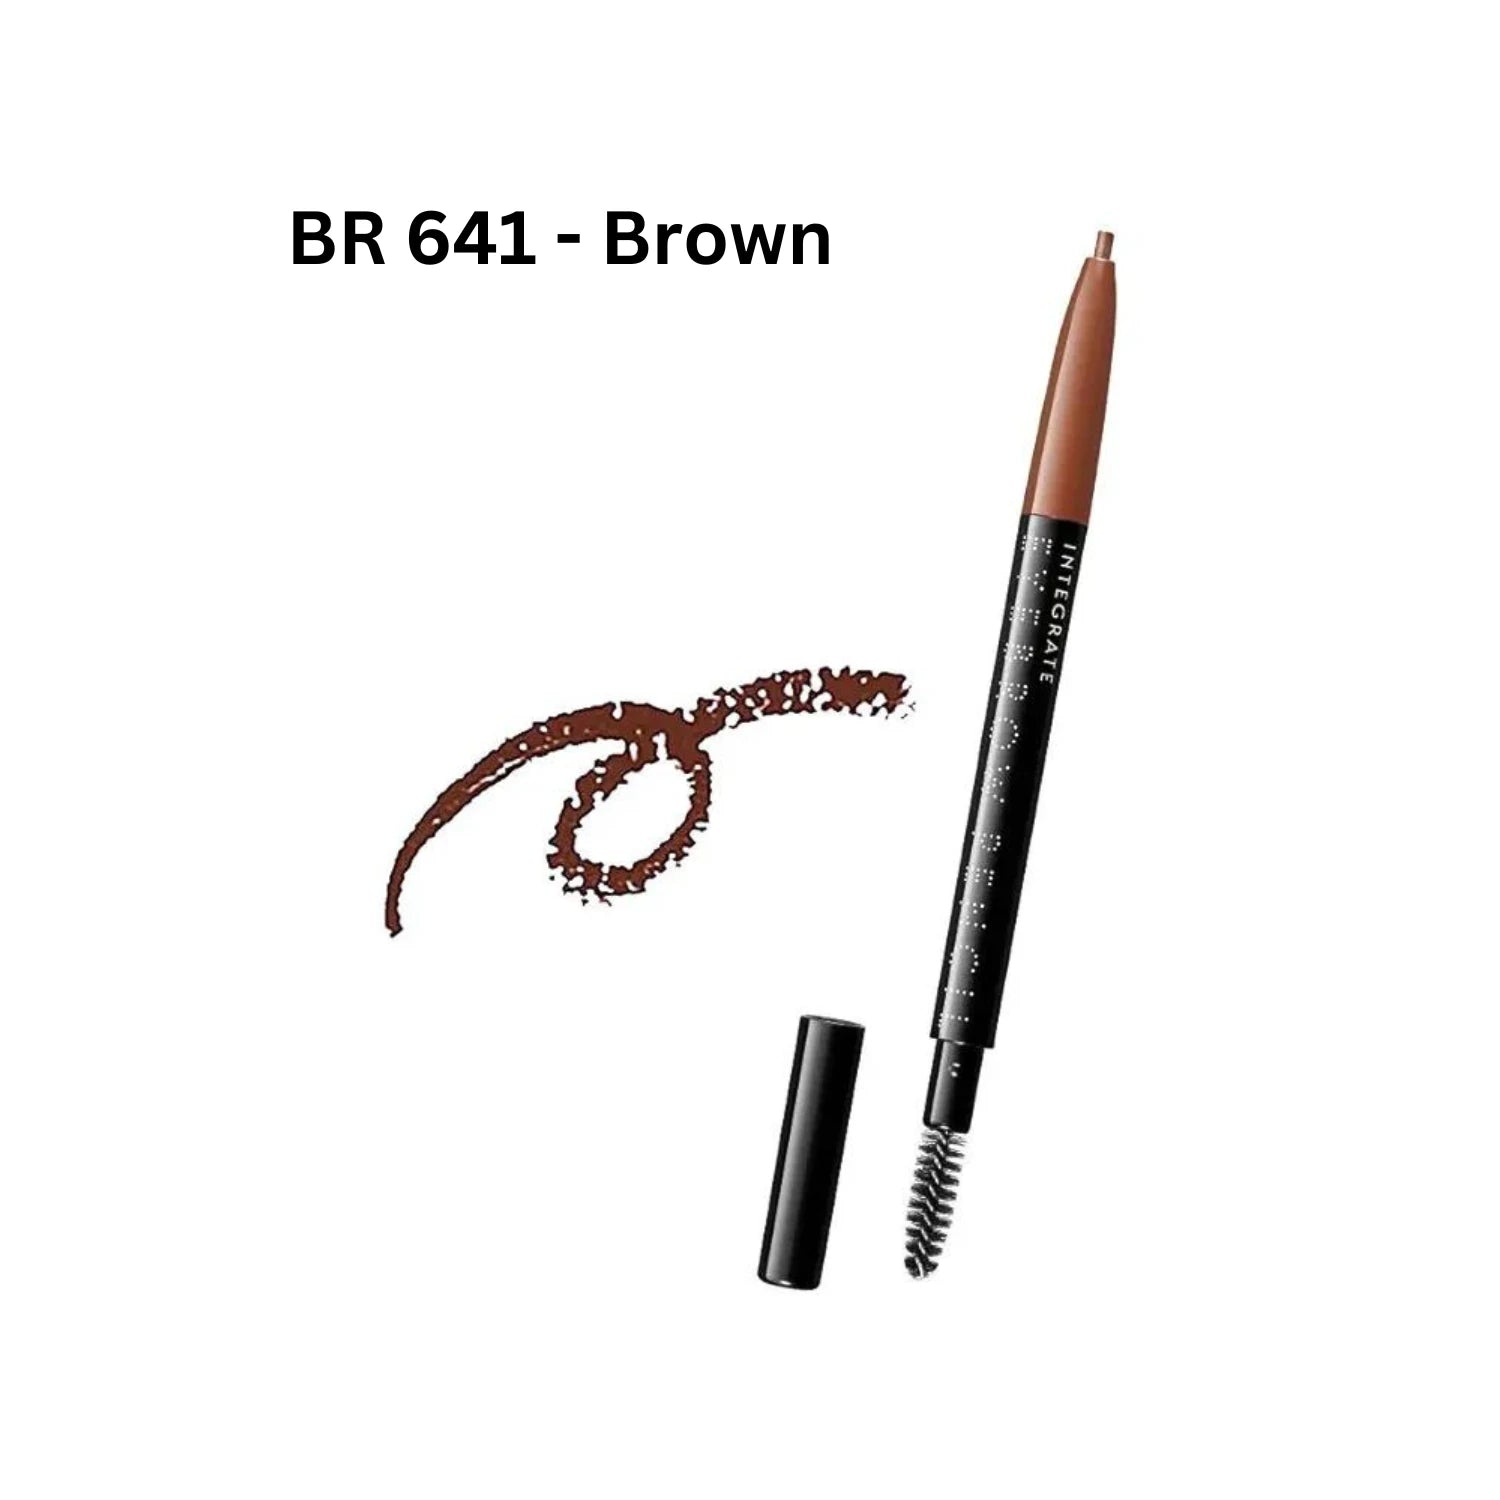 BR 641 - Brown